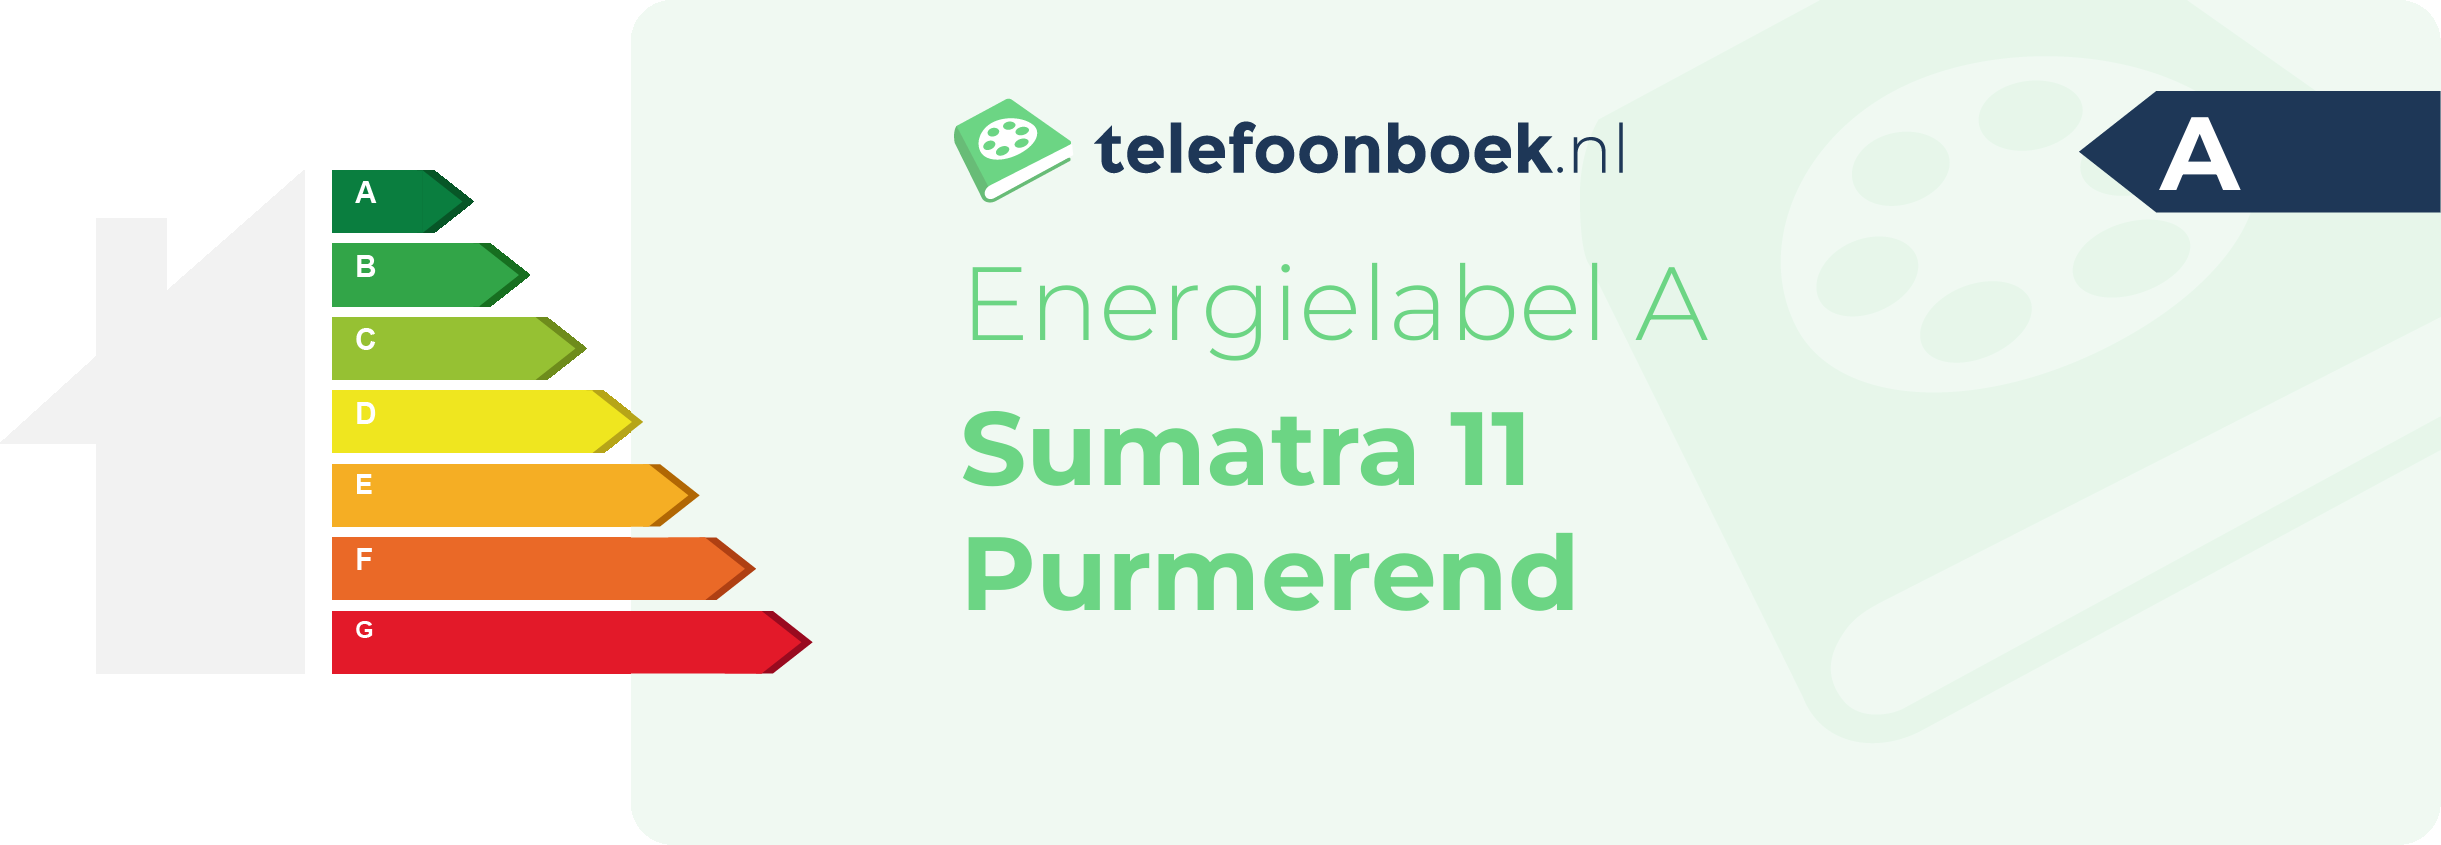 Energielabel Sumatra 11 Purmerend